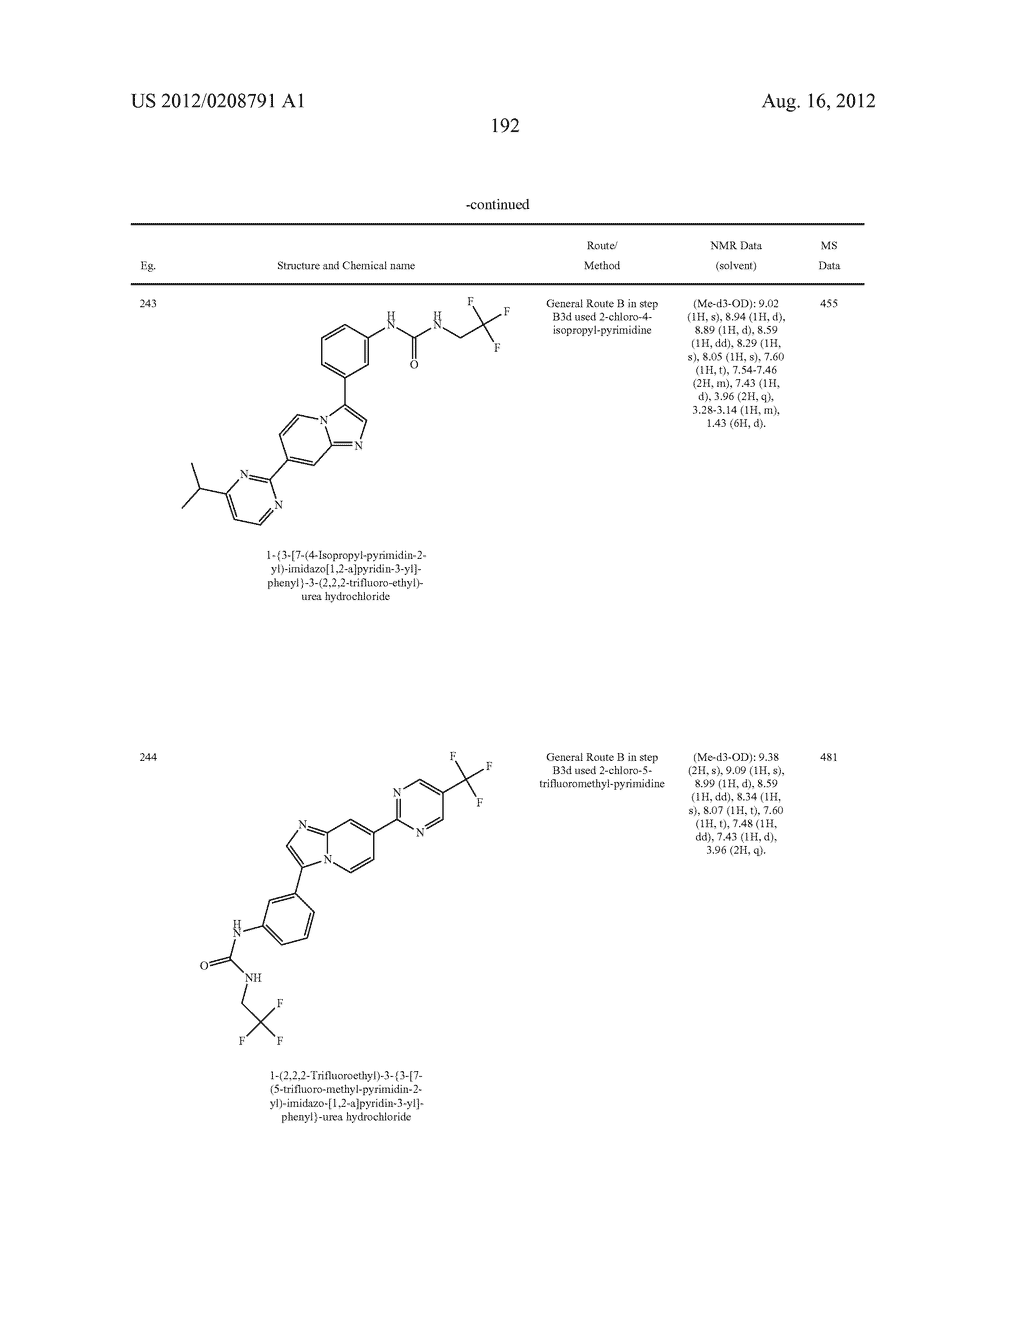 IMIDAZOPYRIDINE DERIVATIVES AS INHIBITORS OF RECEPTOR TYROSINE KINASES - diagram, schematic, and image 193